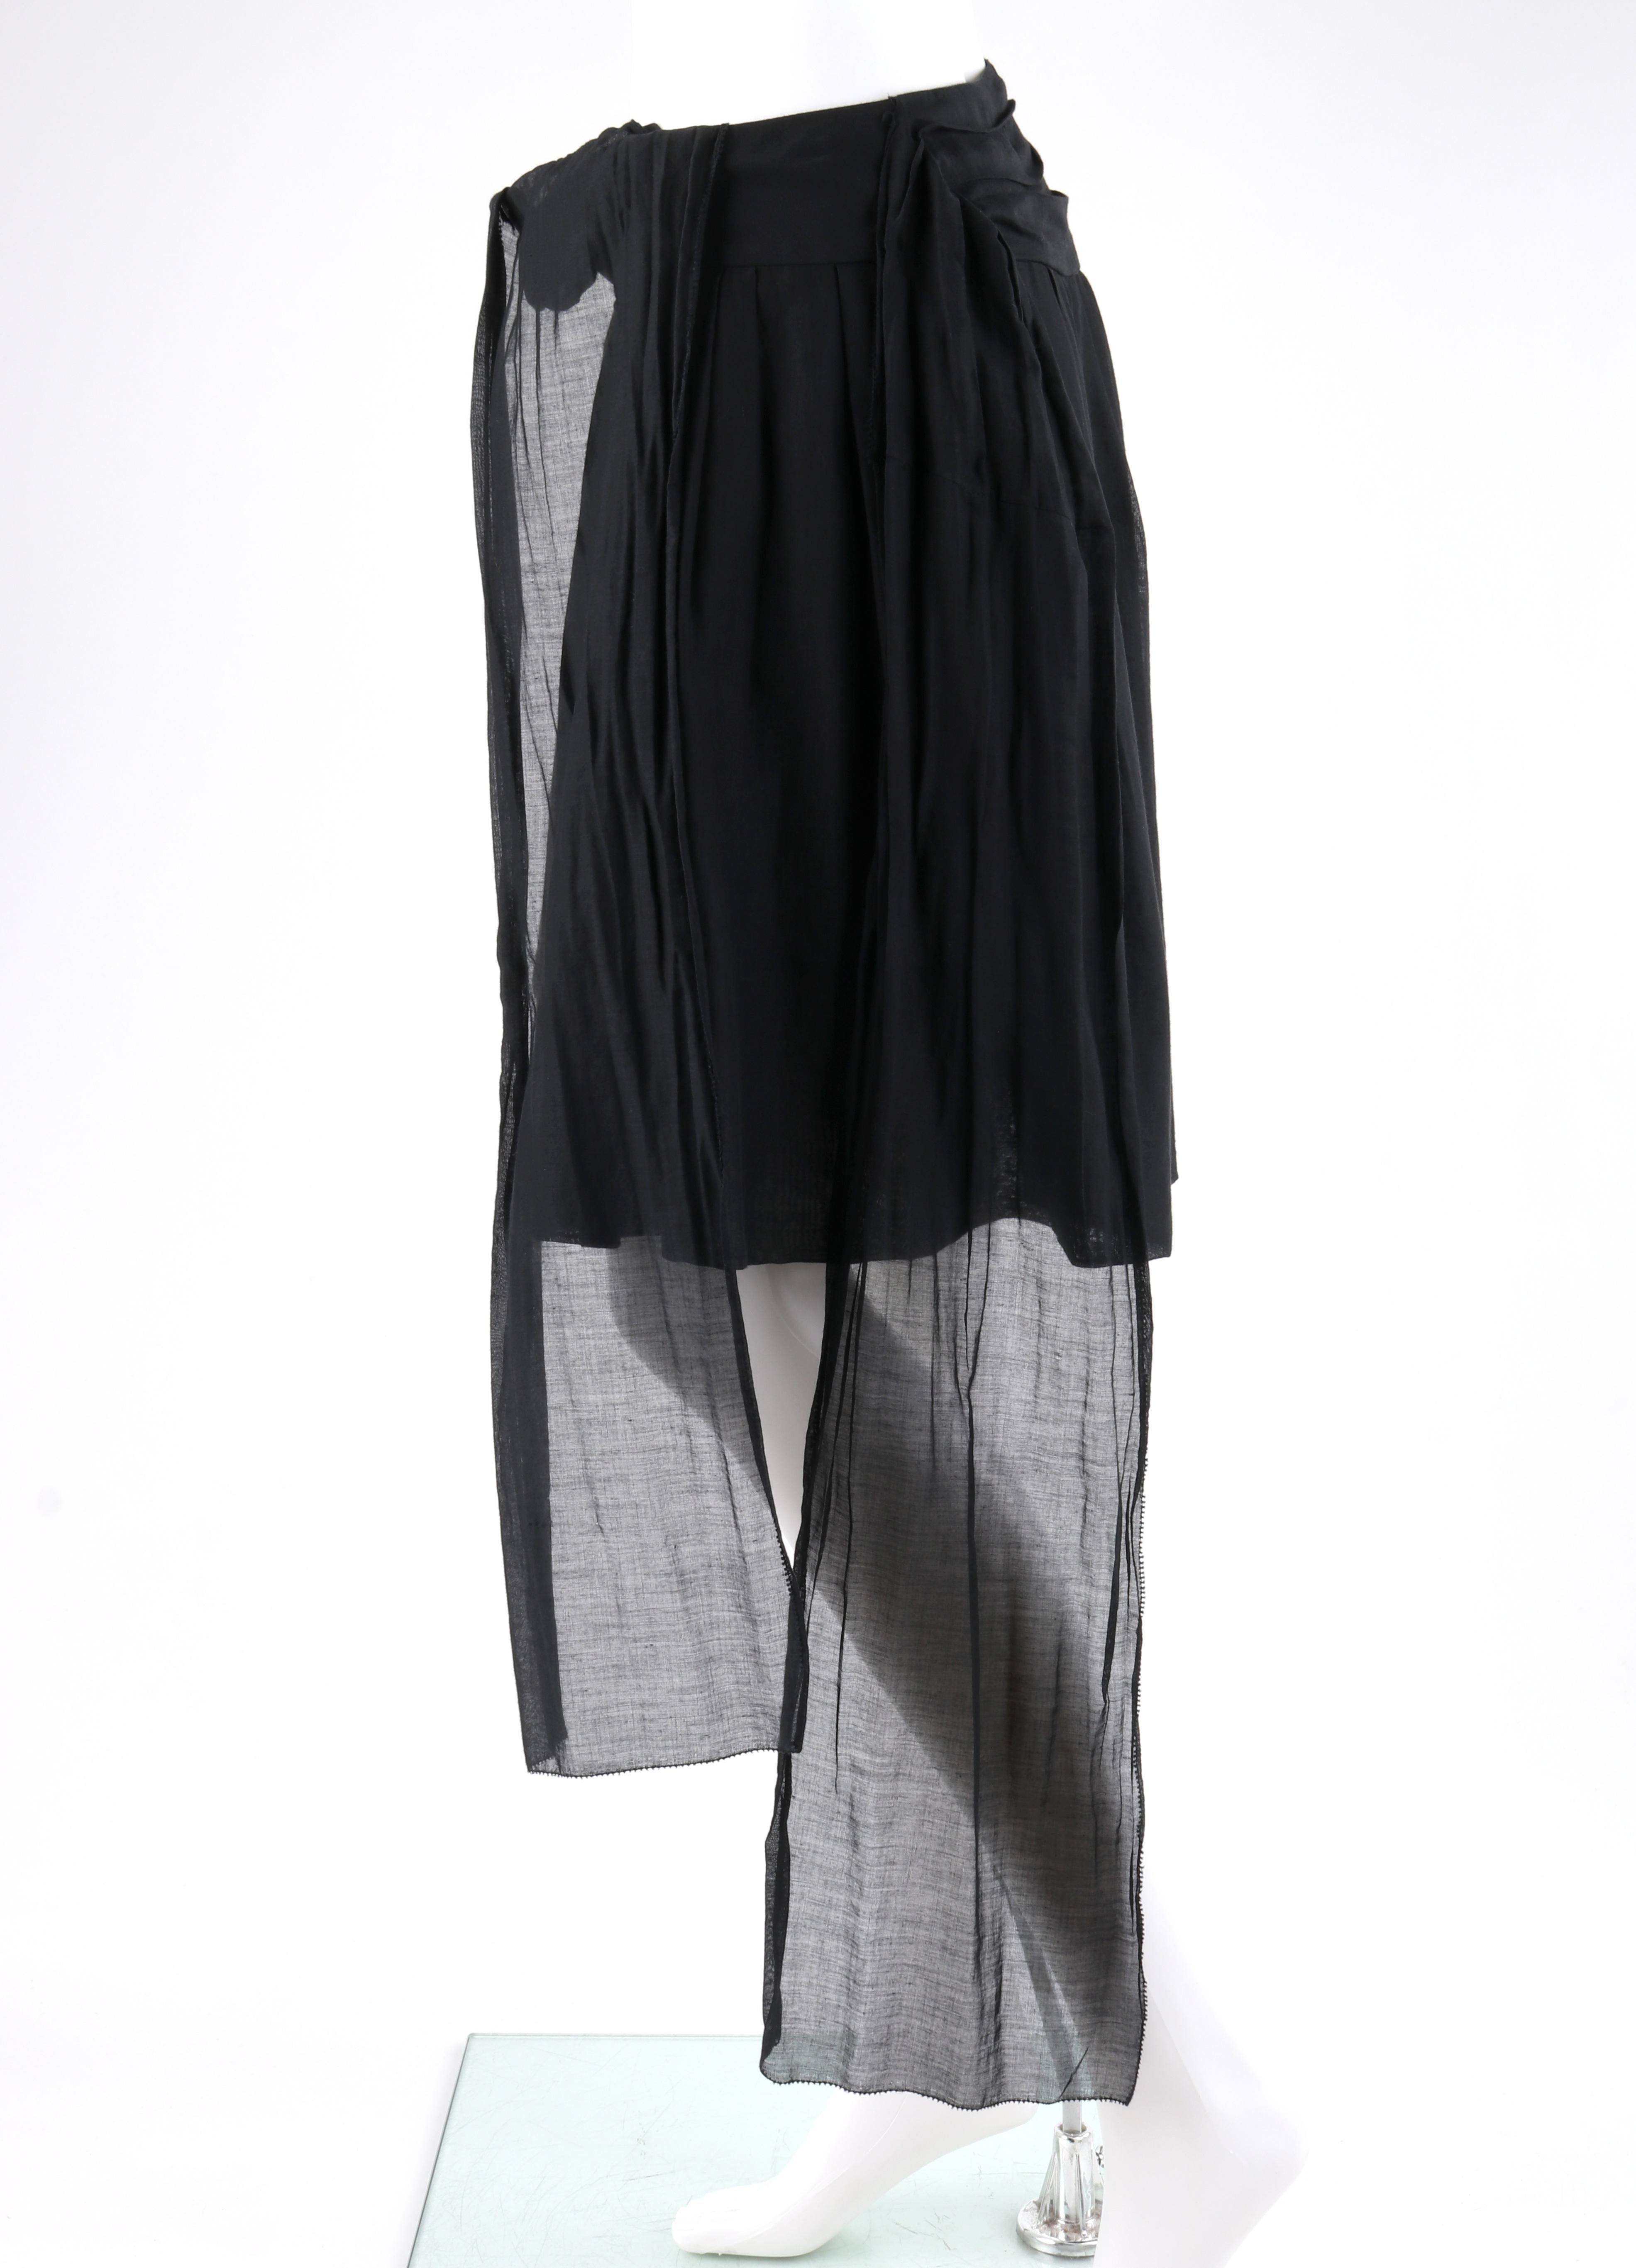 Women's ALEXANDER McQUEEN S/S 2006 “Neptune” Black Pleated Sash Tie Circle Skirt